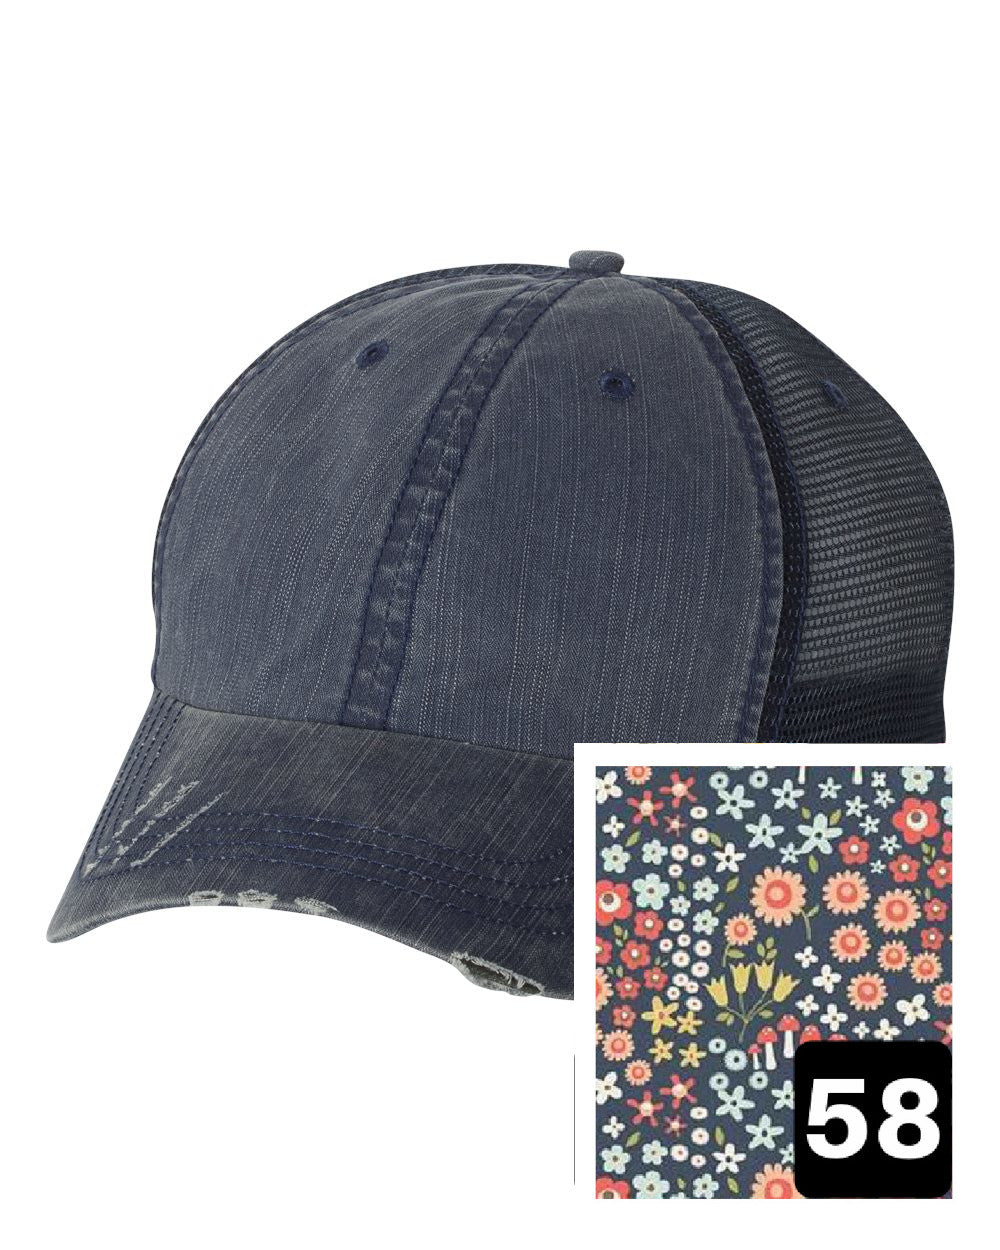 Washington Hat | Navy Distressed Trucker Cap | Many Fabric Choices